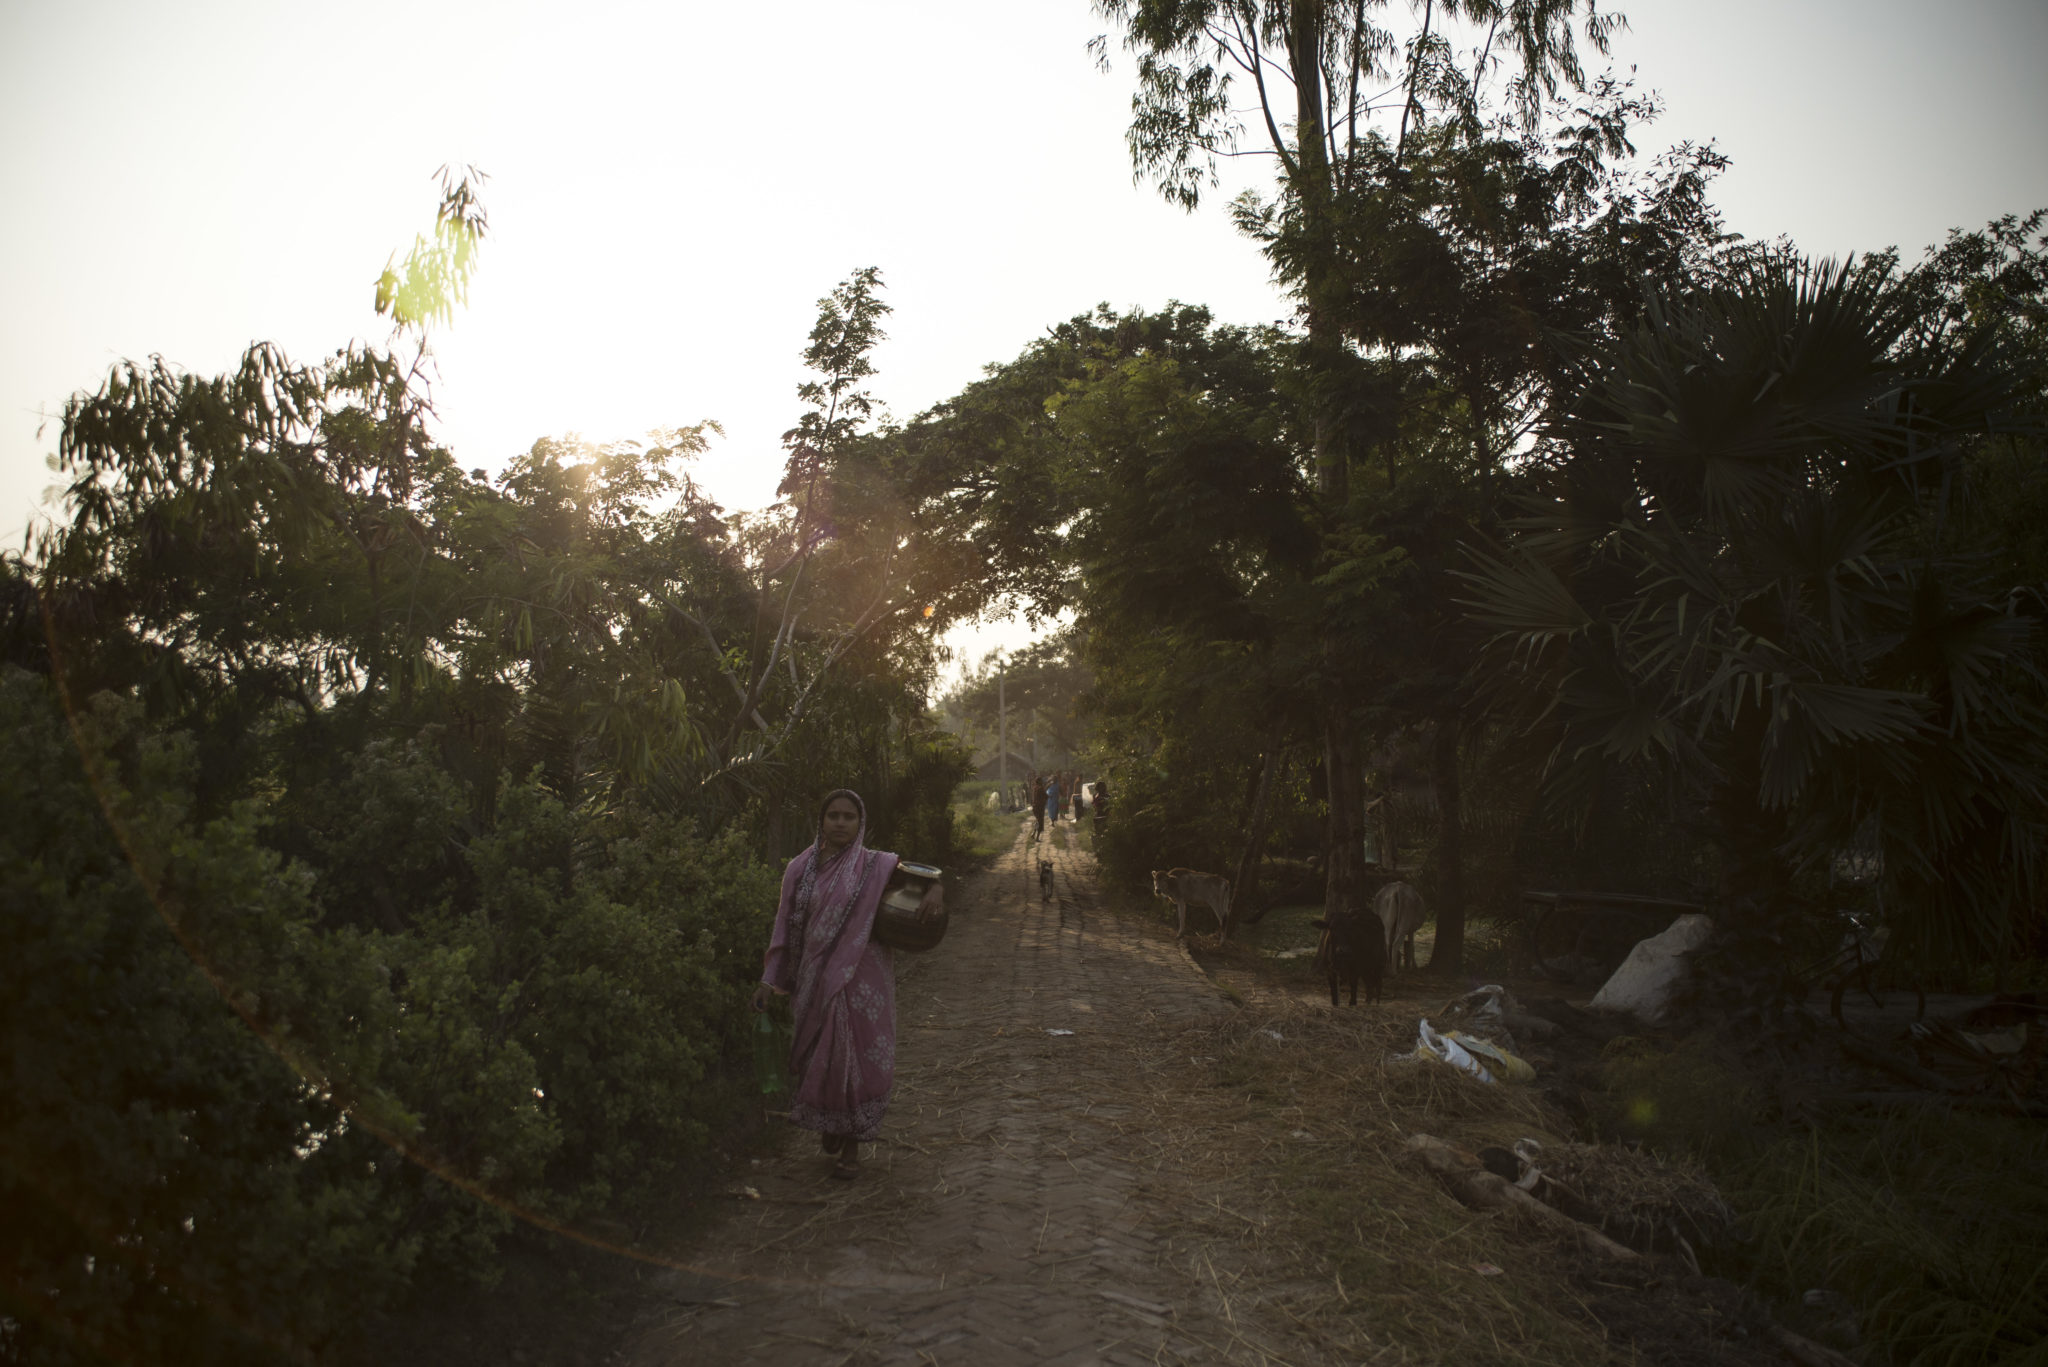 photograph of a woman walking at dusk down a dirt road